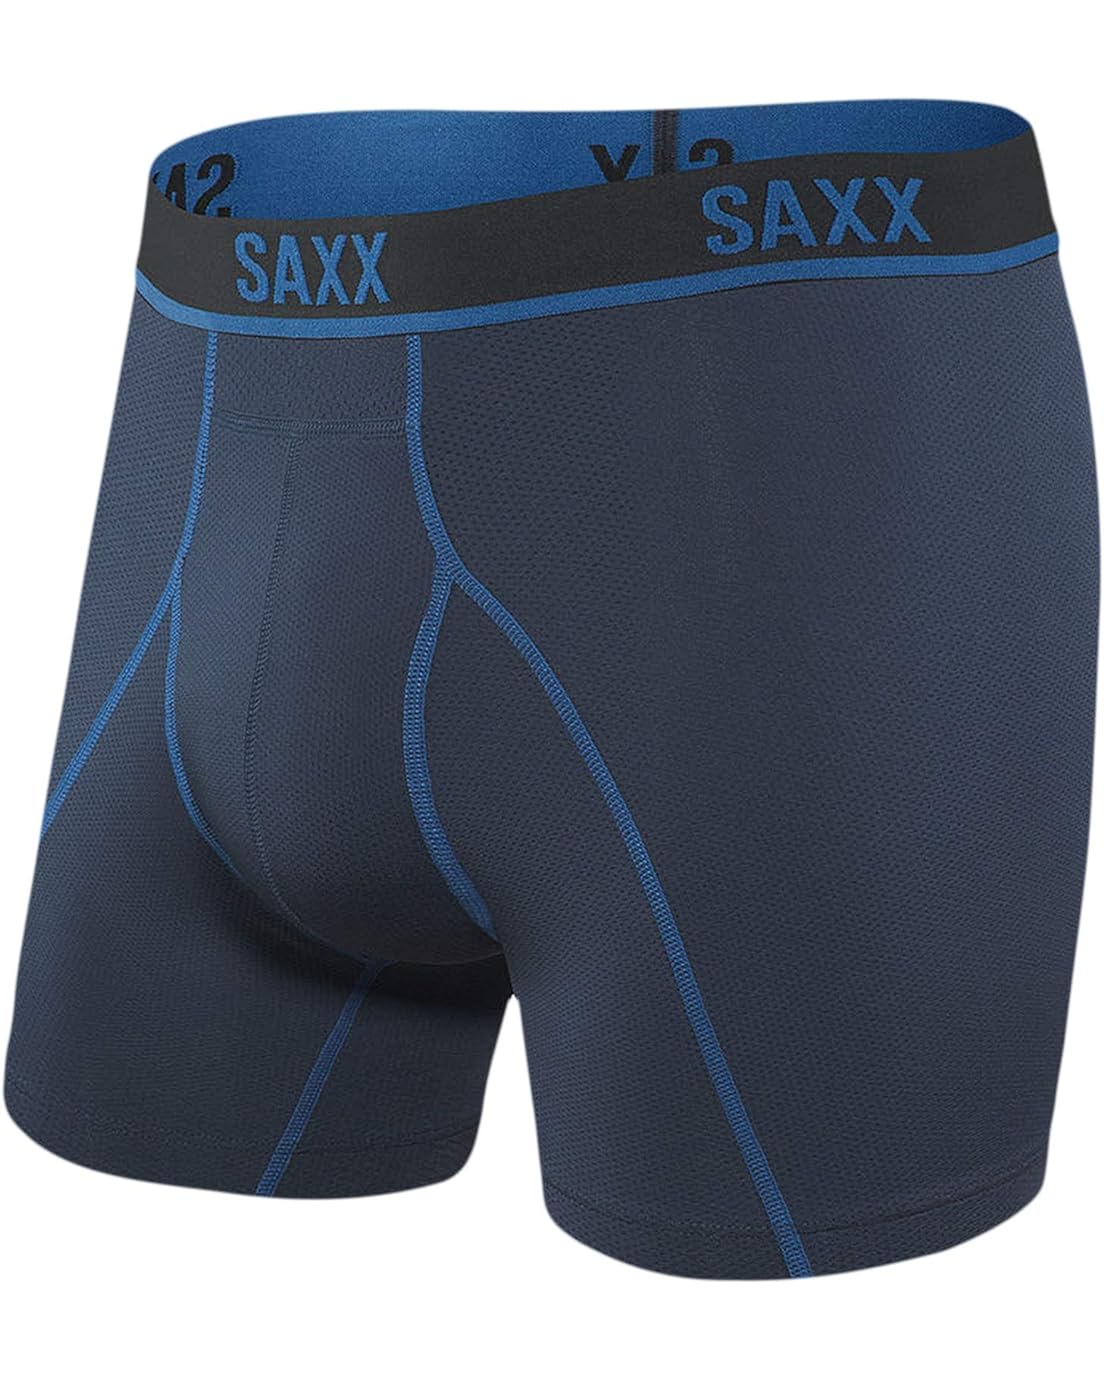  SAXX UNDERWEAR Kinetic HD Boxer Brief